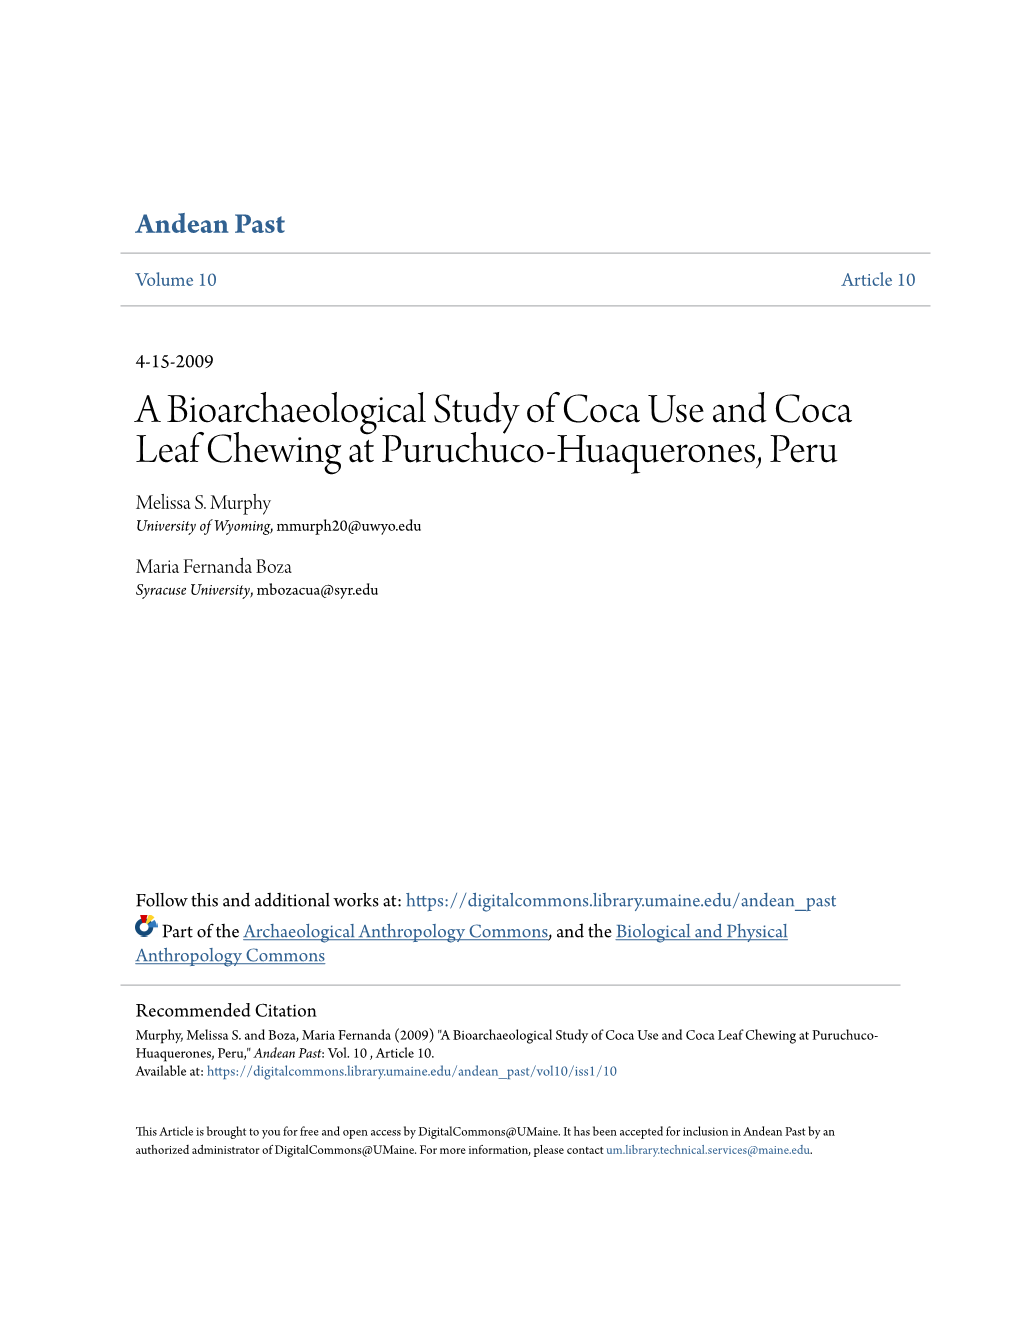 A Bioarchaeological Study of Coca Use and Coca Leaf Chewing at Puruchuco-Huaquerones, Peru Melissa S